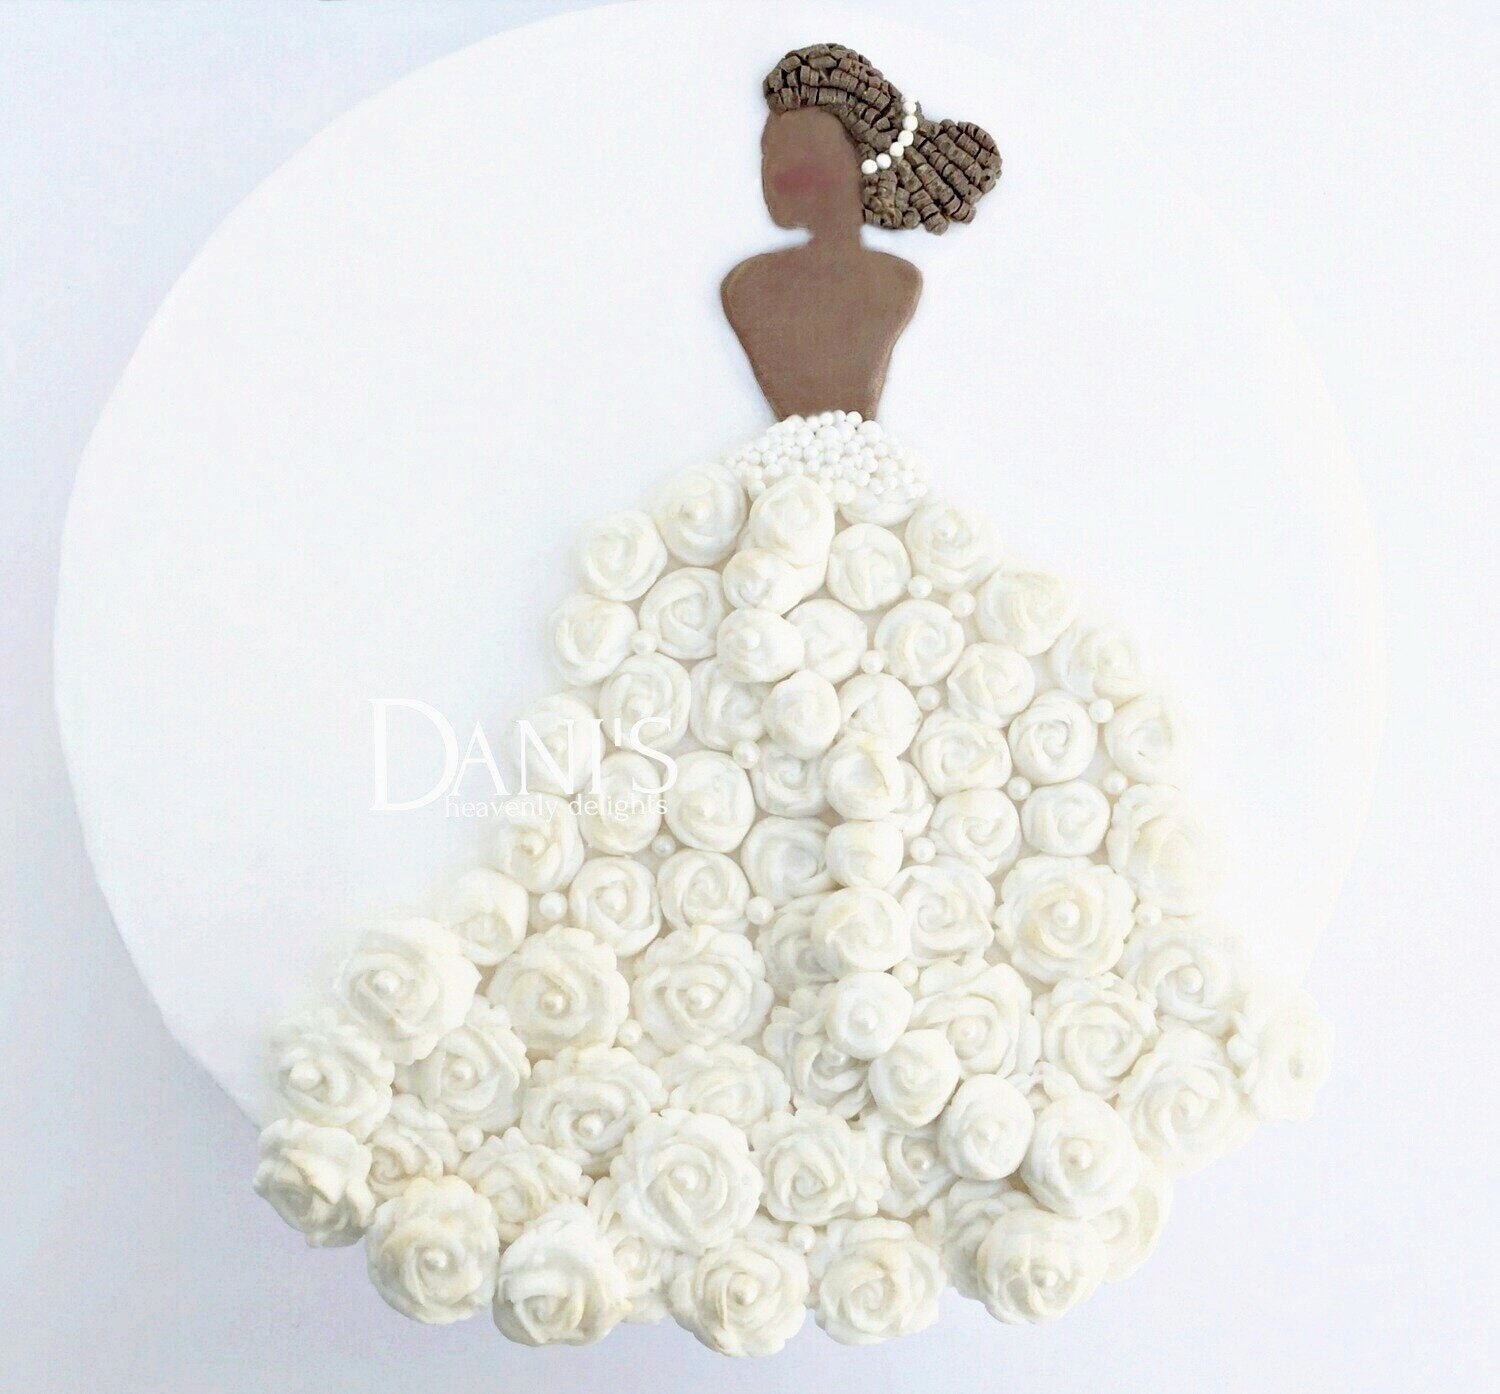 bridal-dress-cake-wedding-dress-cake-danis-heavenly-delights-bakeshop-f.jpg